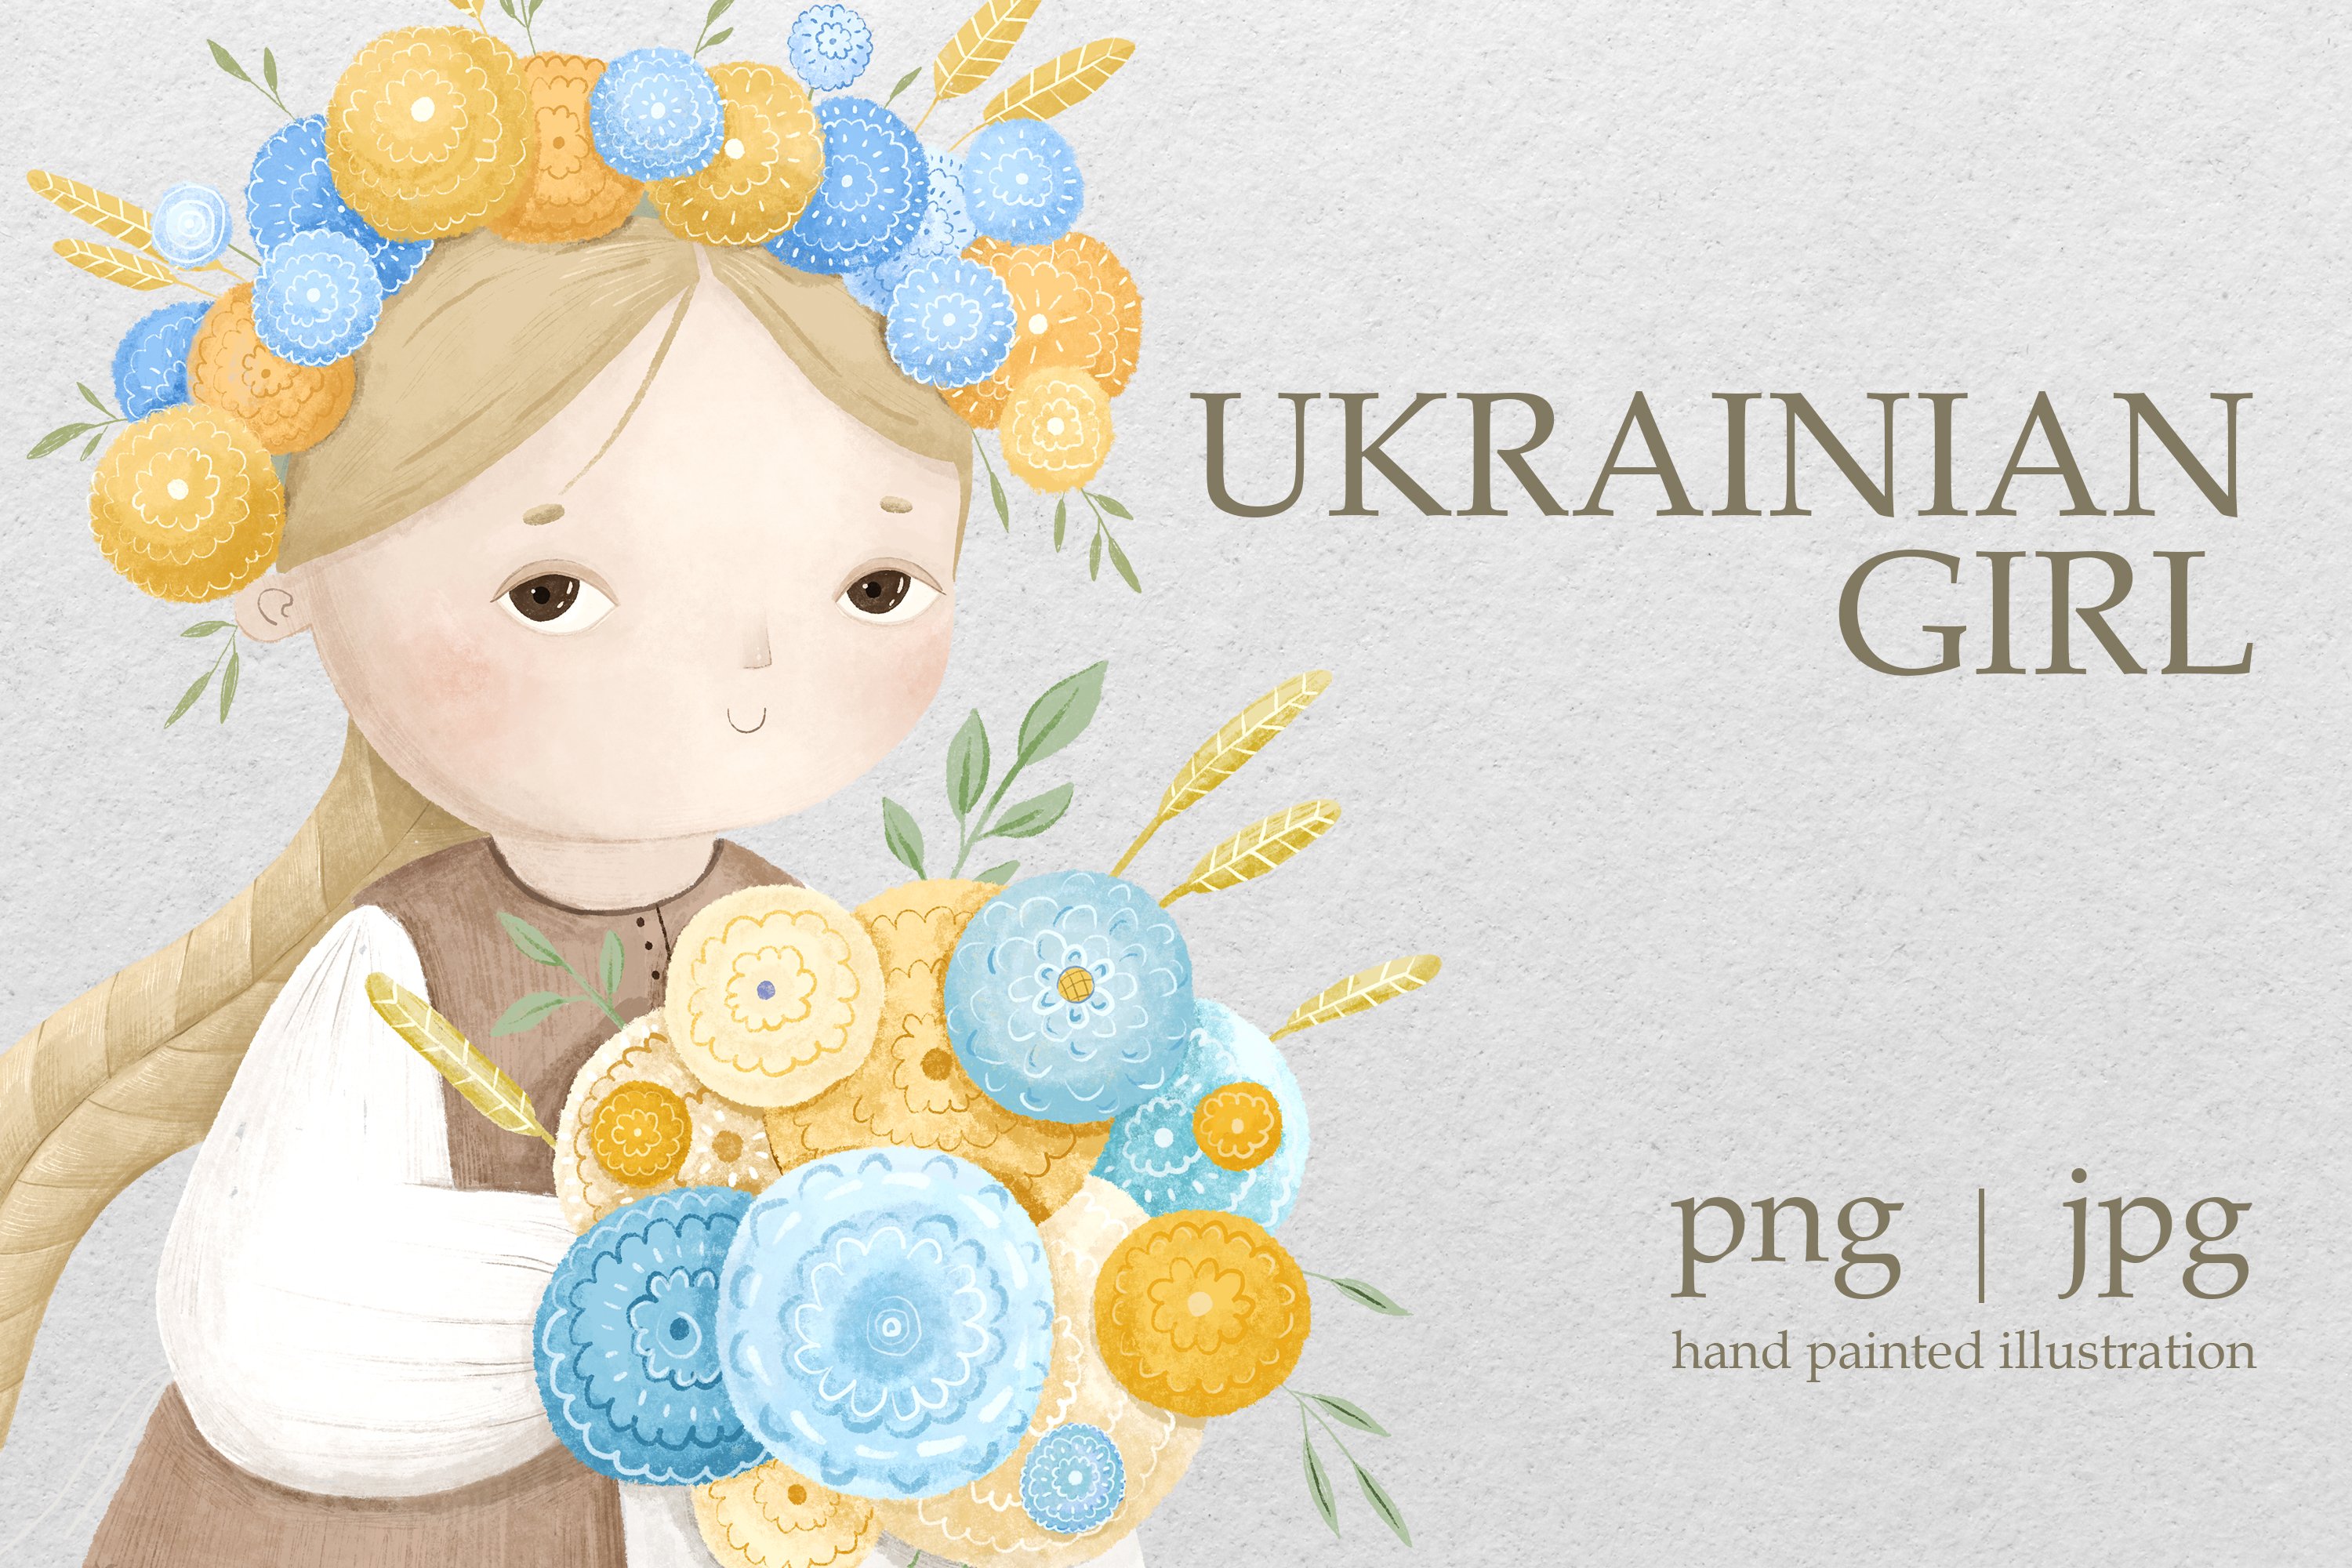 UKRAINE. UKRAINIAN GIRL cover image.